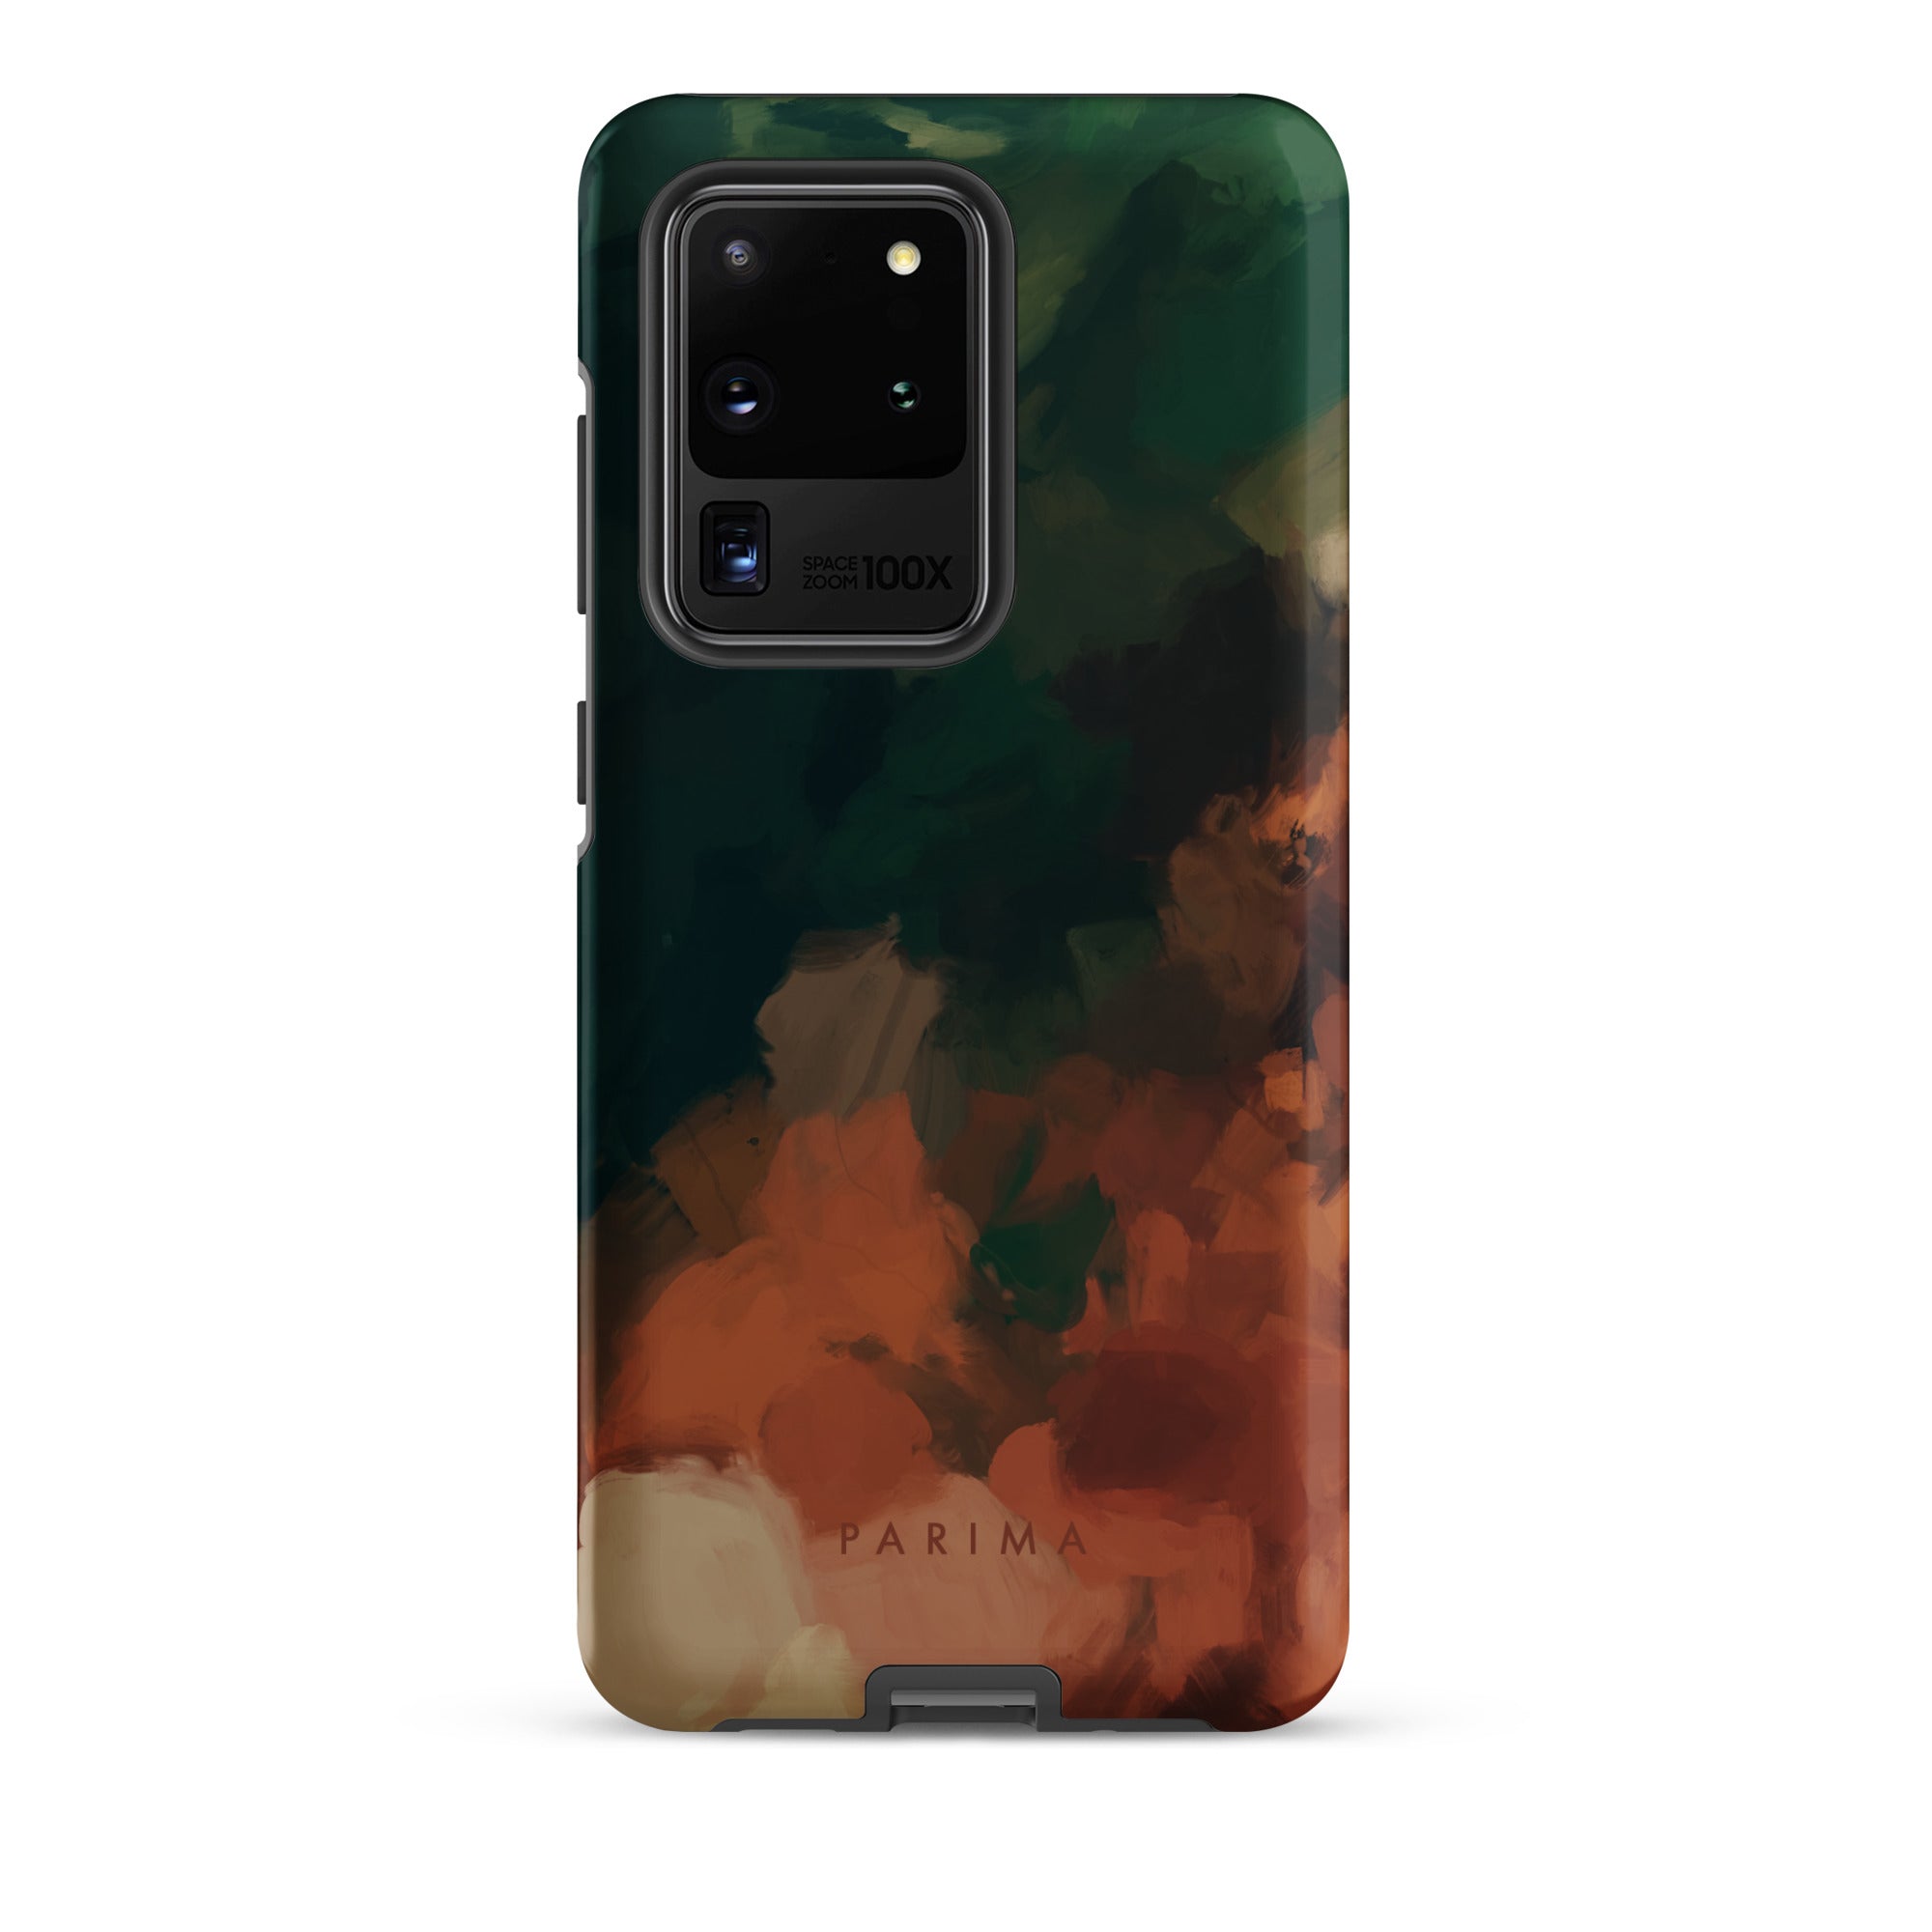 Cedar, green and brown abstract art on Samsung Galaxy S20 Ultra tough case by Parima Studio